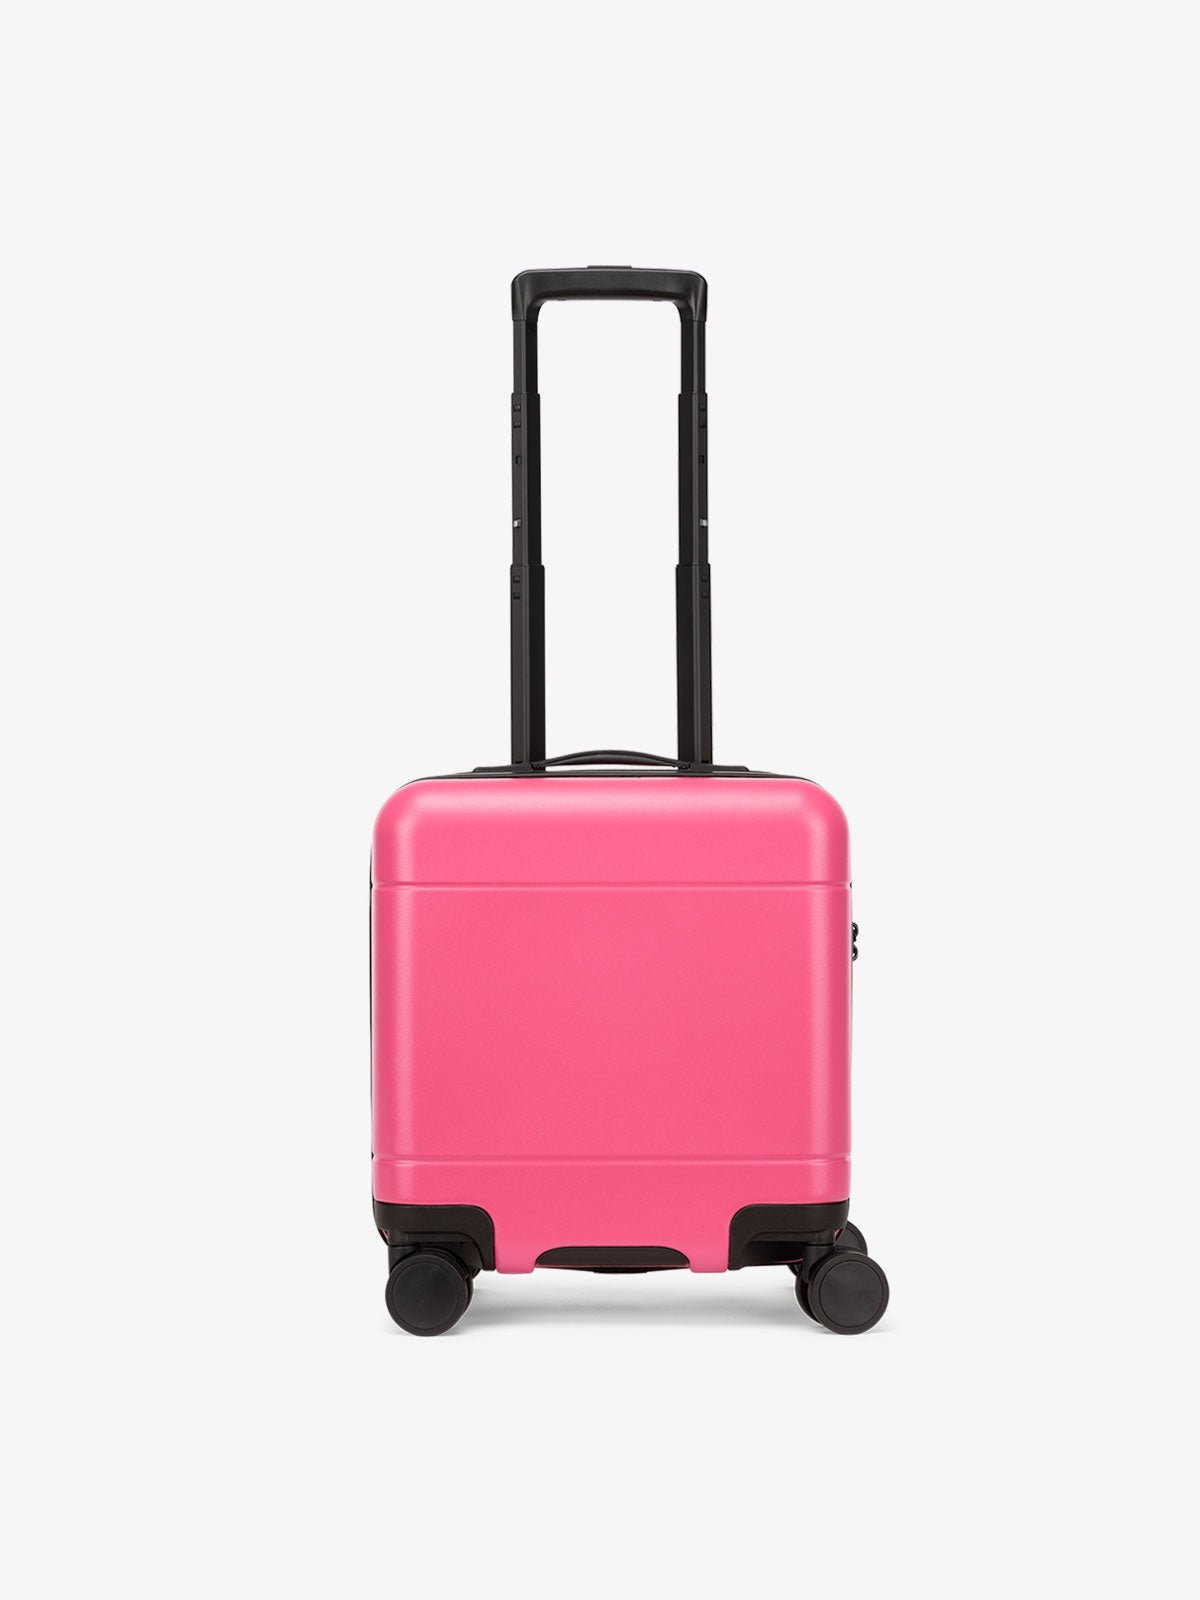 CALPAK Hue Mini Carry-On Luggage in dragonfruit